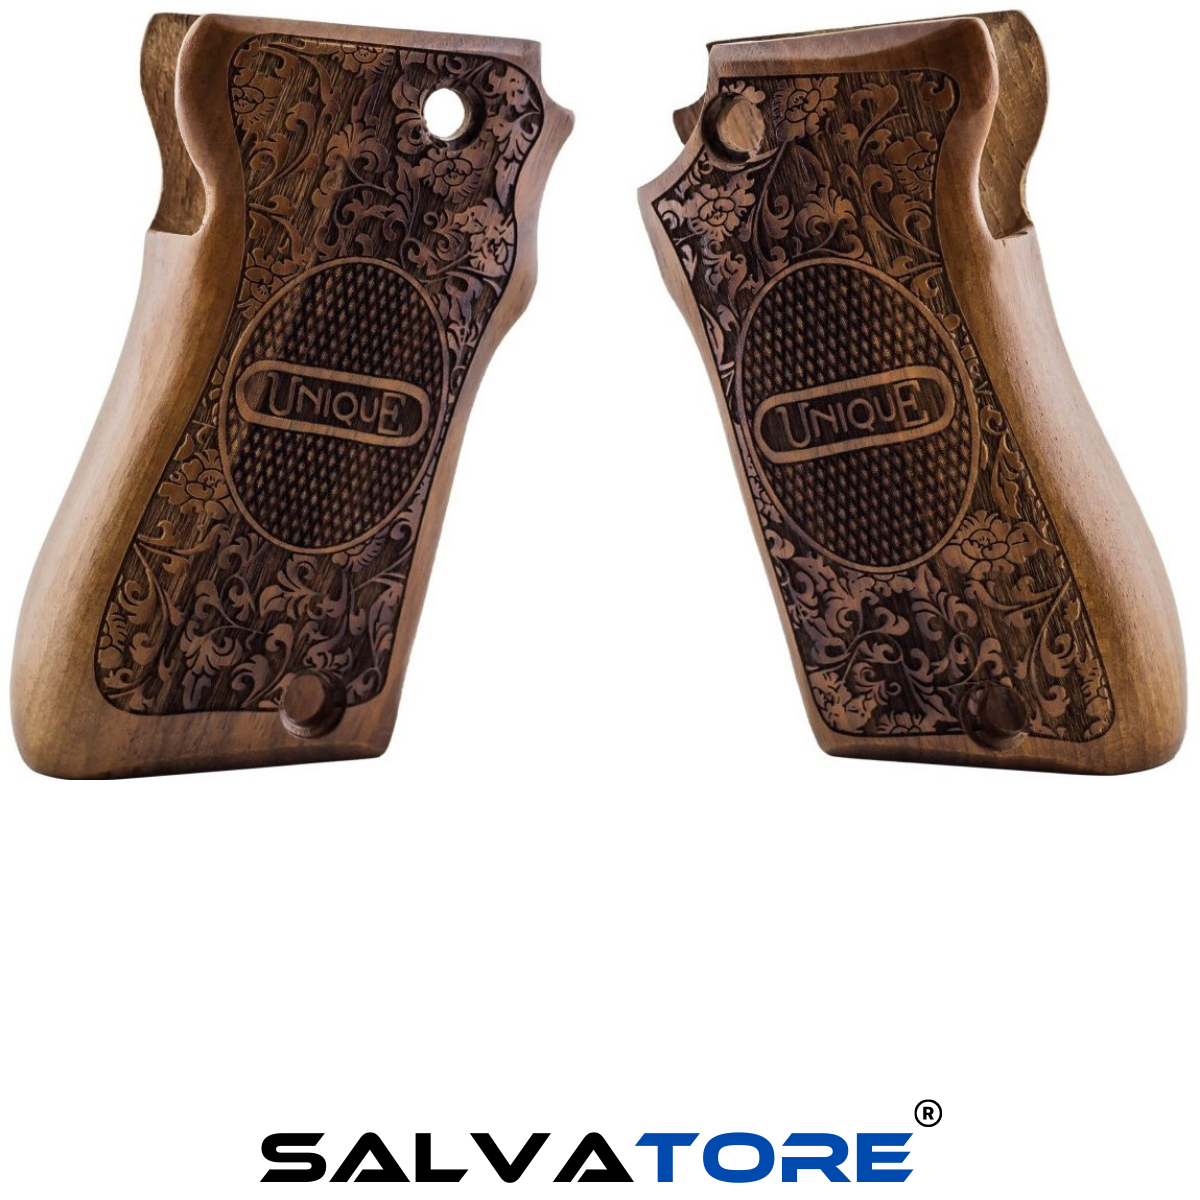 Salvatore Pistol Grips Revolver Grips For BCF 66 Handmade Walnut Gun Accessories Hunting Shooting